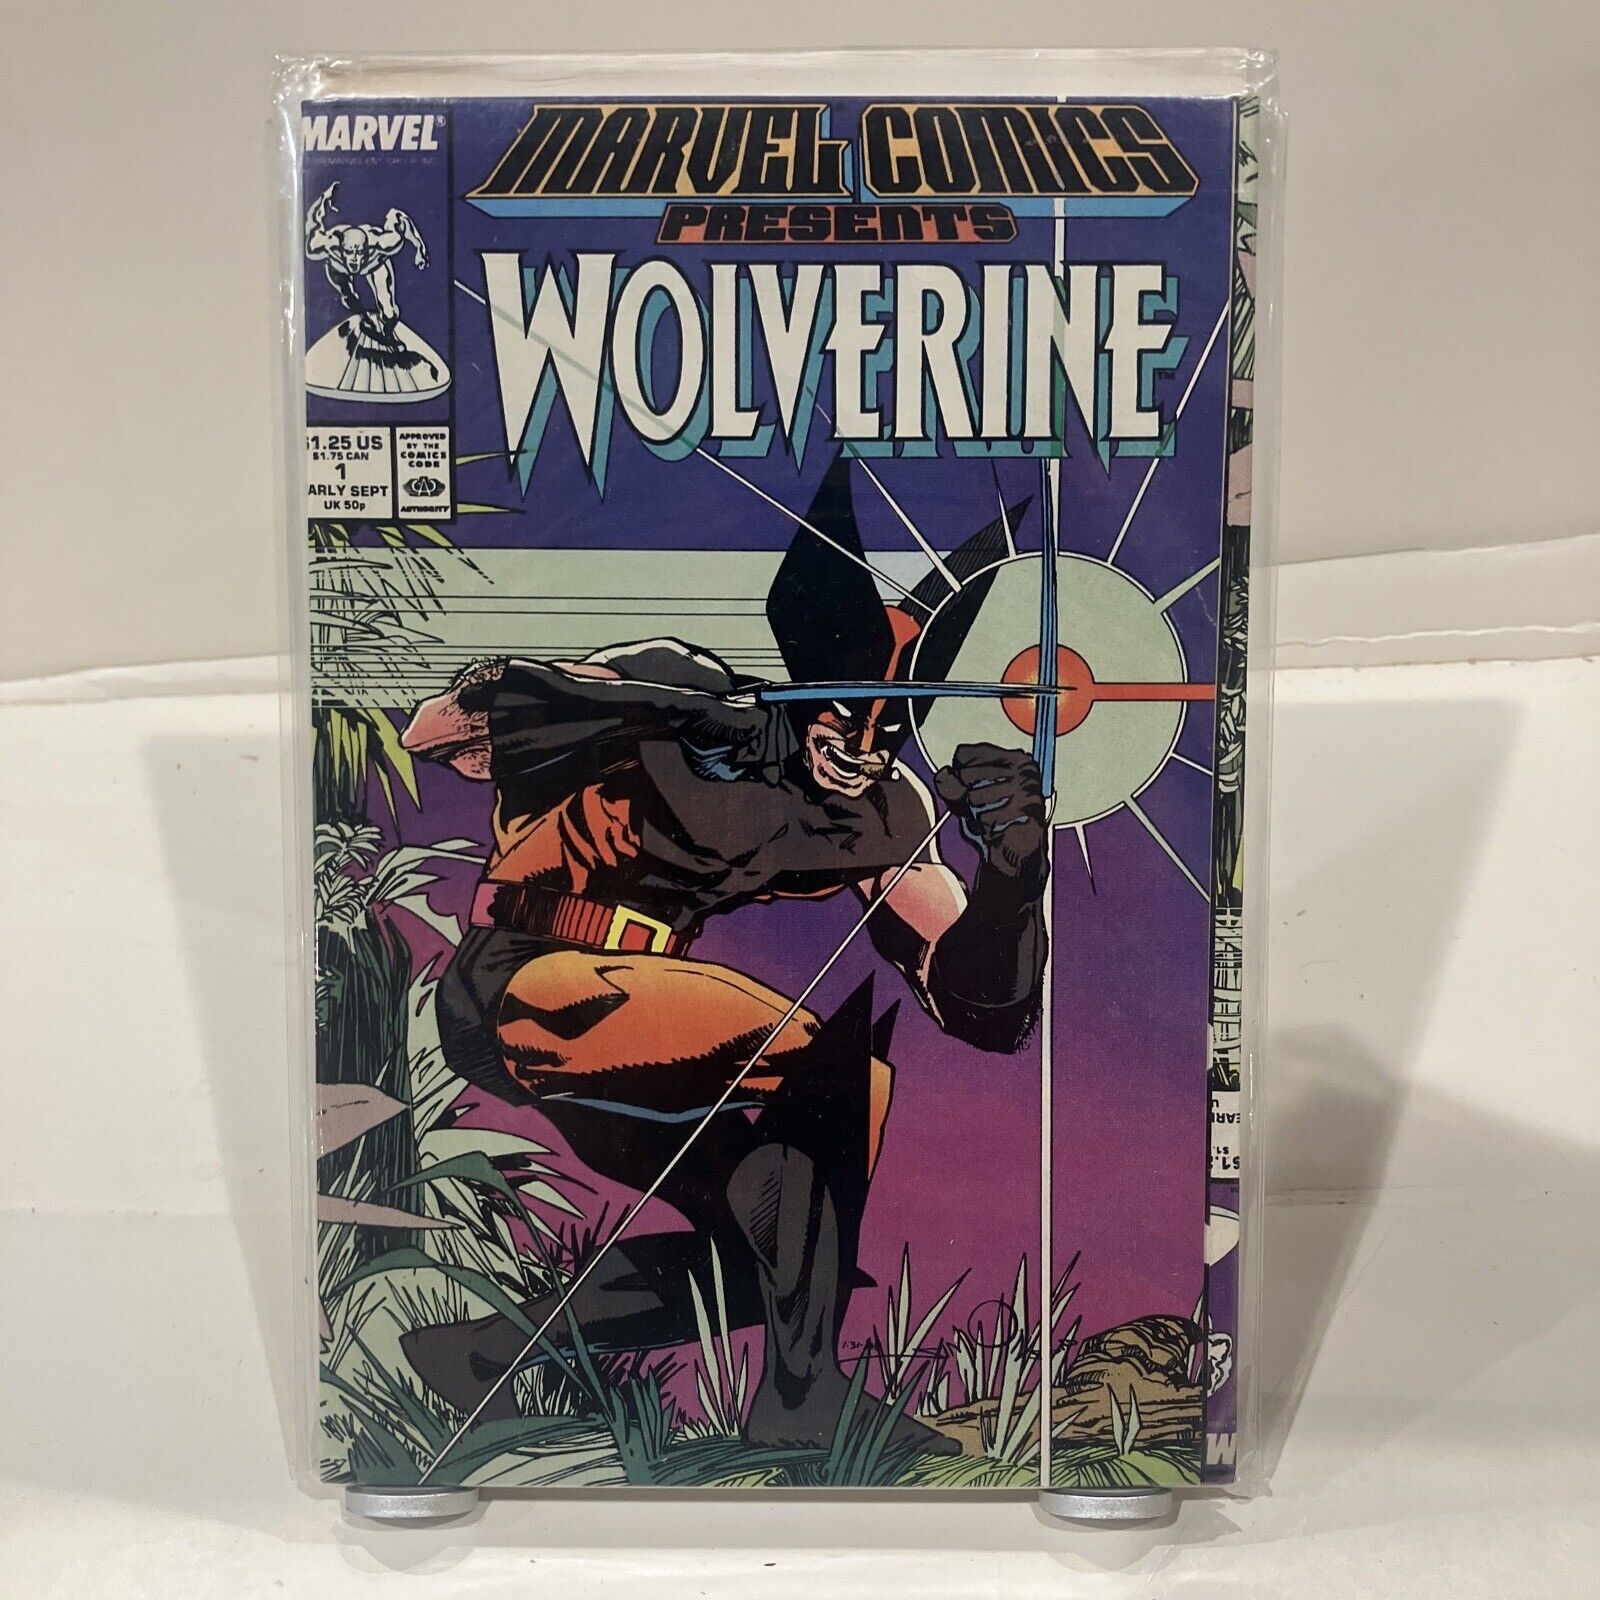 Marvel Comics Presents: Wolverine #1 (Marvel, 2005)